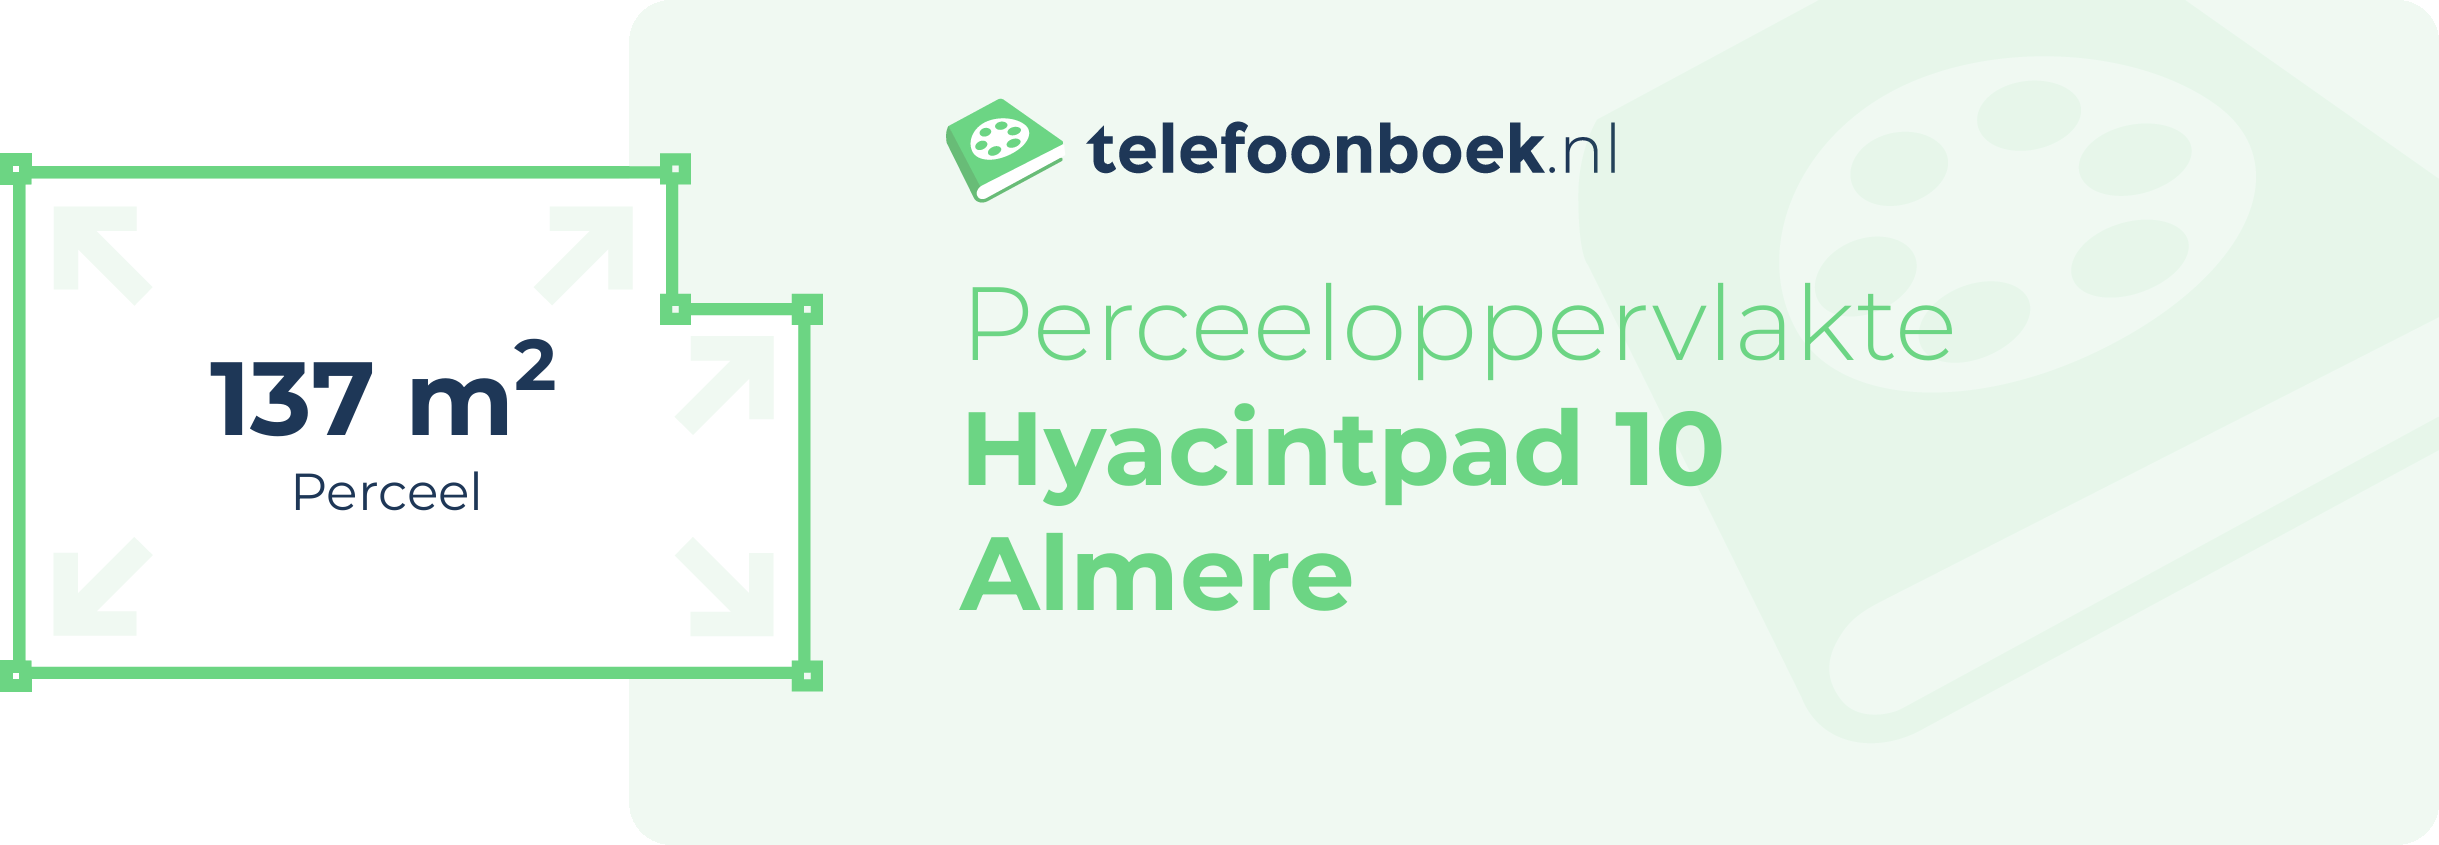 Perceeloppervlakte Hyacintpad 10 Almere